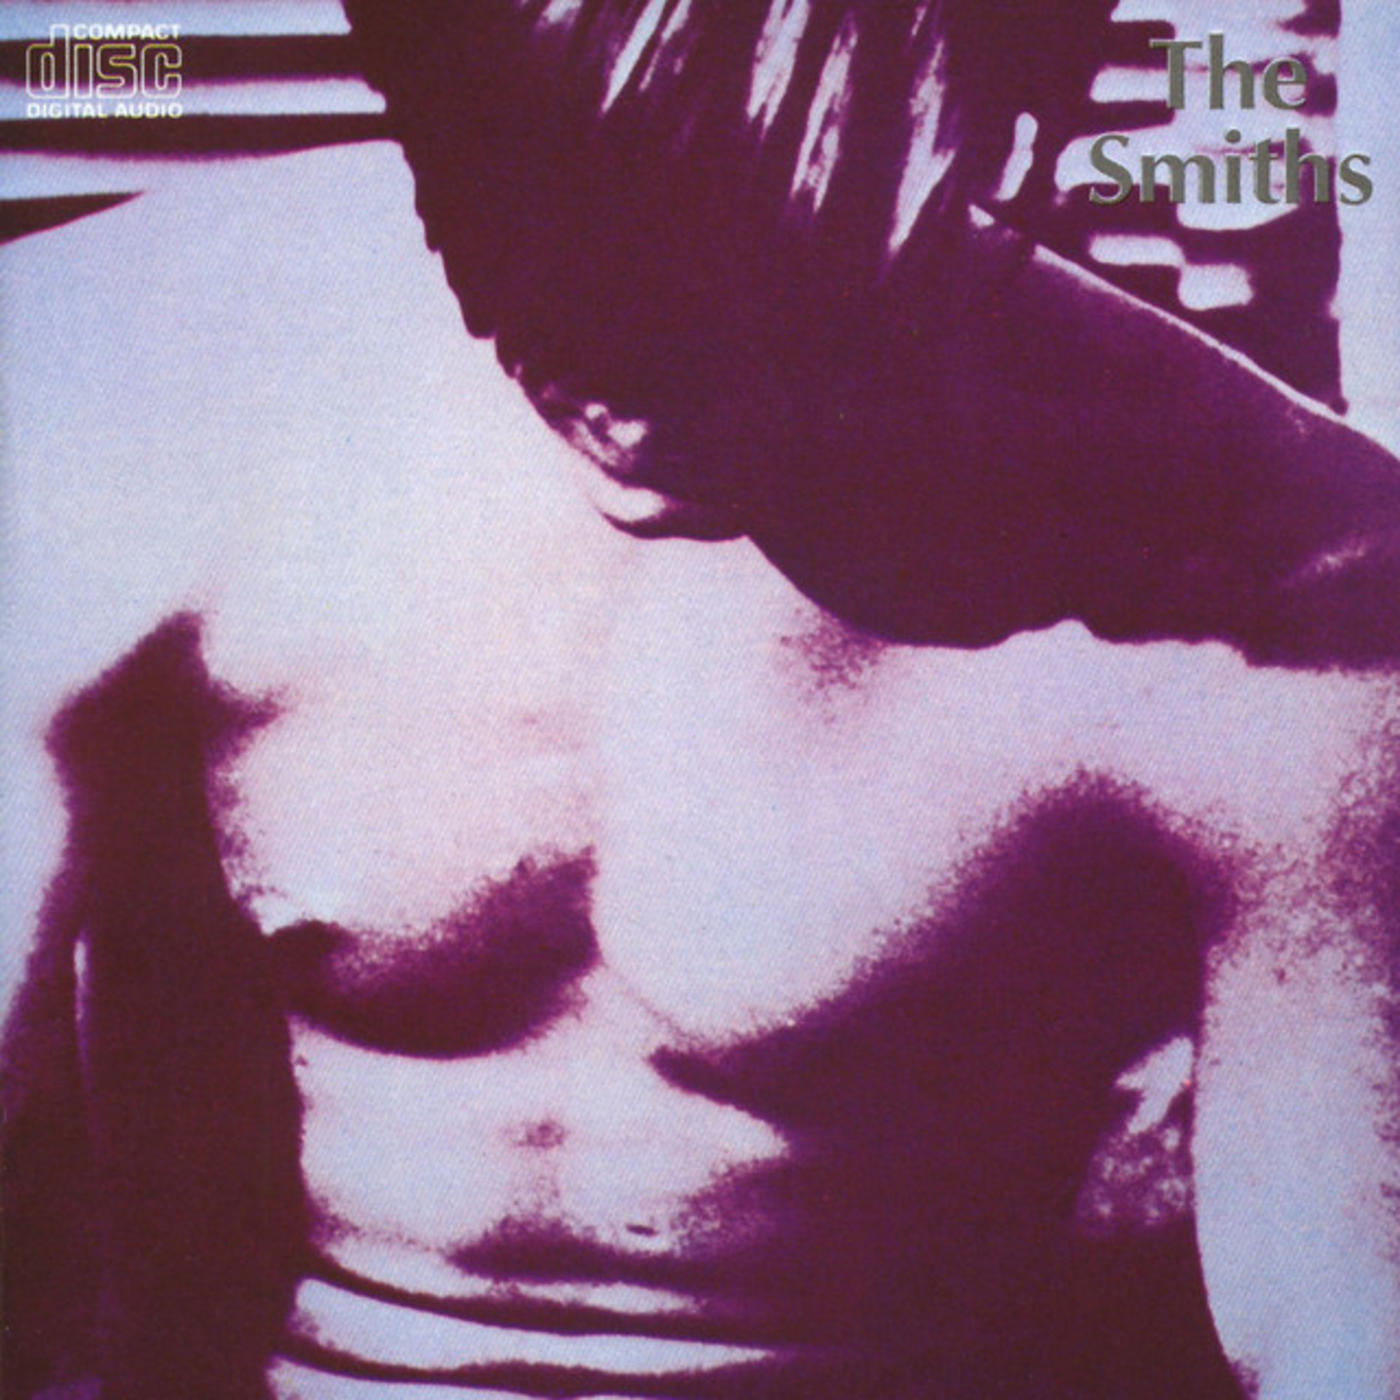 Happy Anniversary: The Smiths